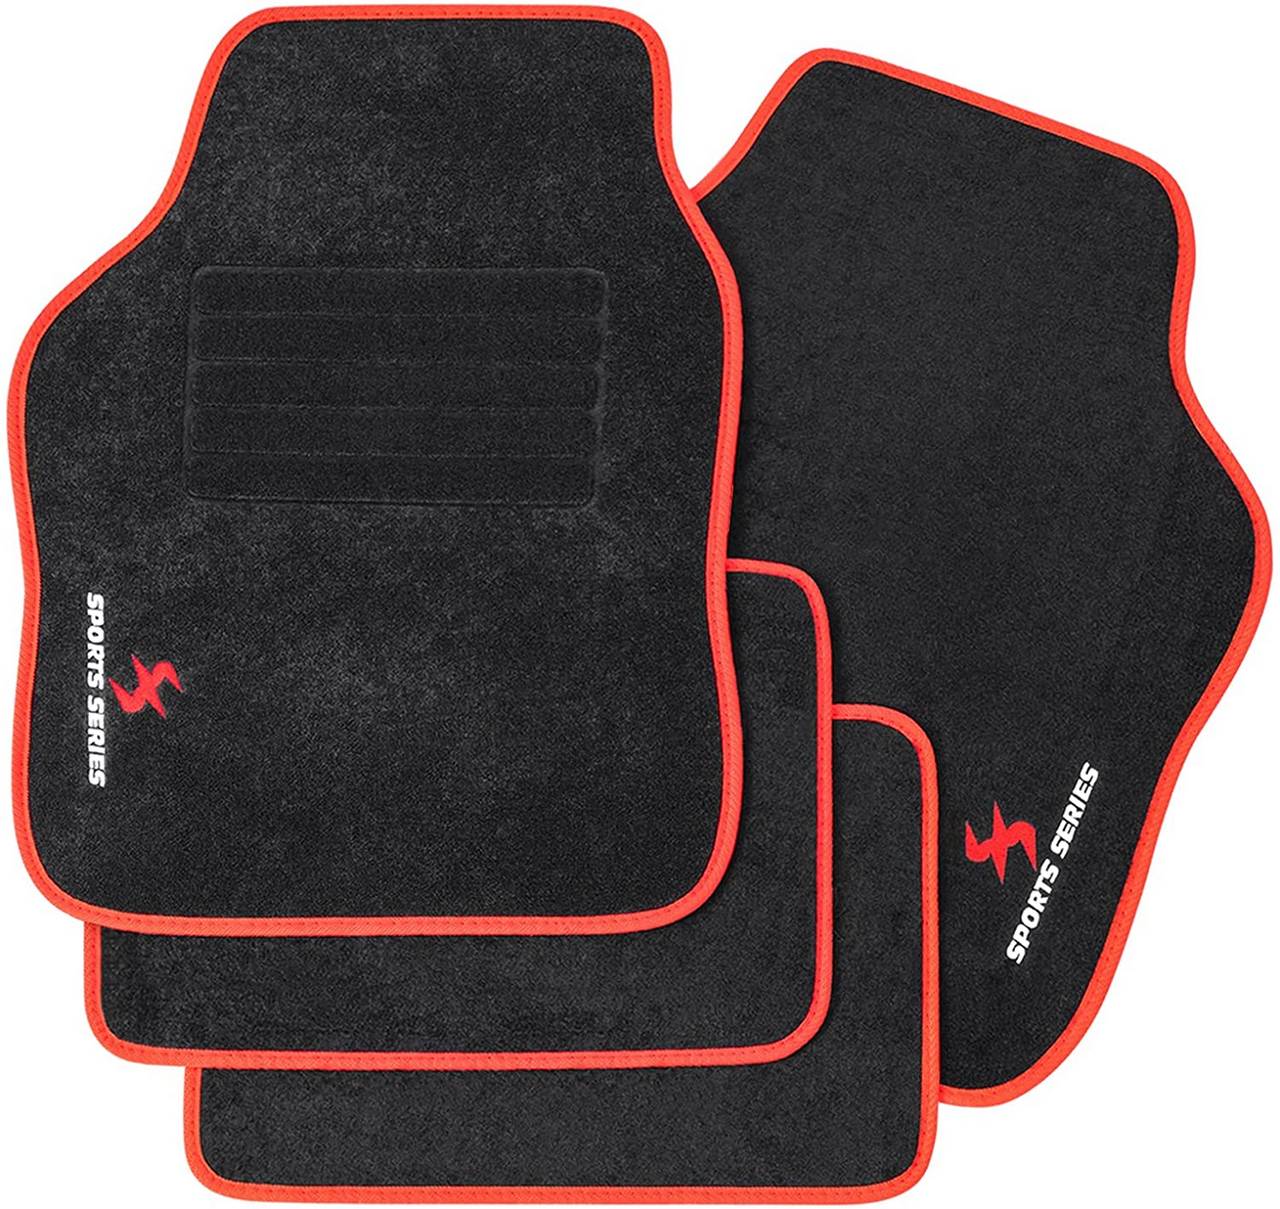 Car floor mat set with 4 mats car carpet water non-slip heel protectors